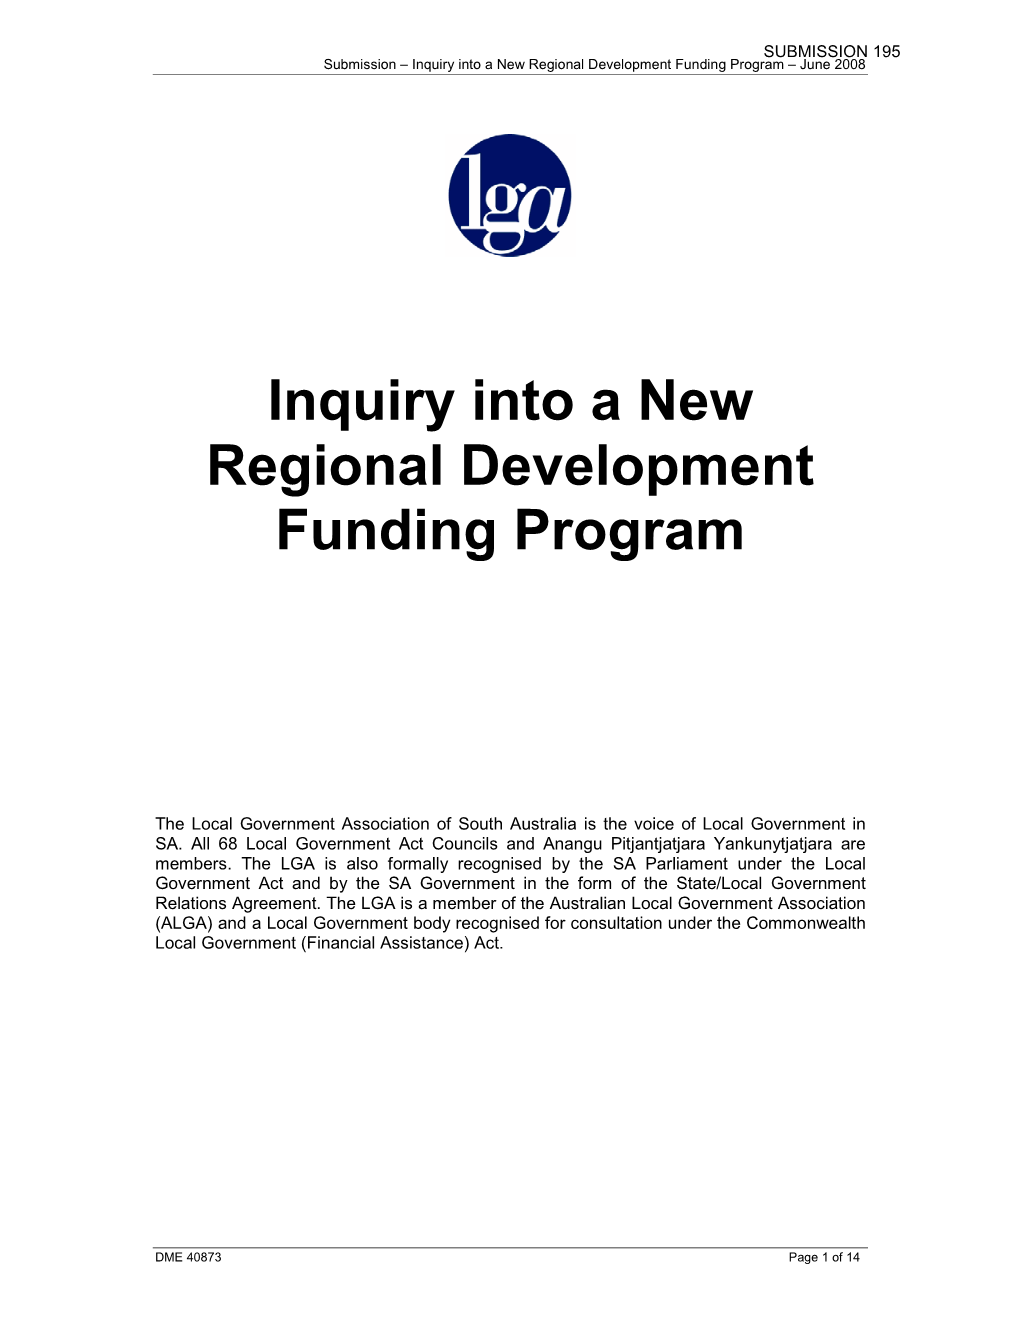 Inquiry Into a New Regional Development Funding Program – June 2008